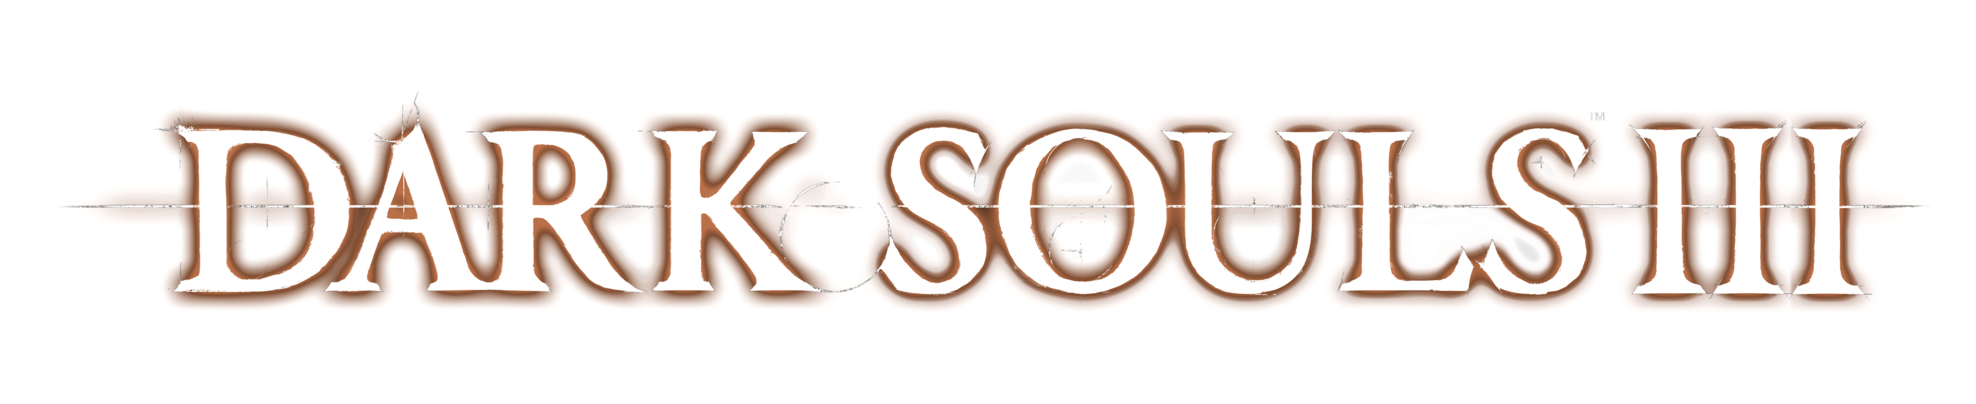 Dark Souls III logo.png